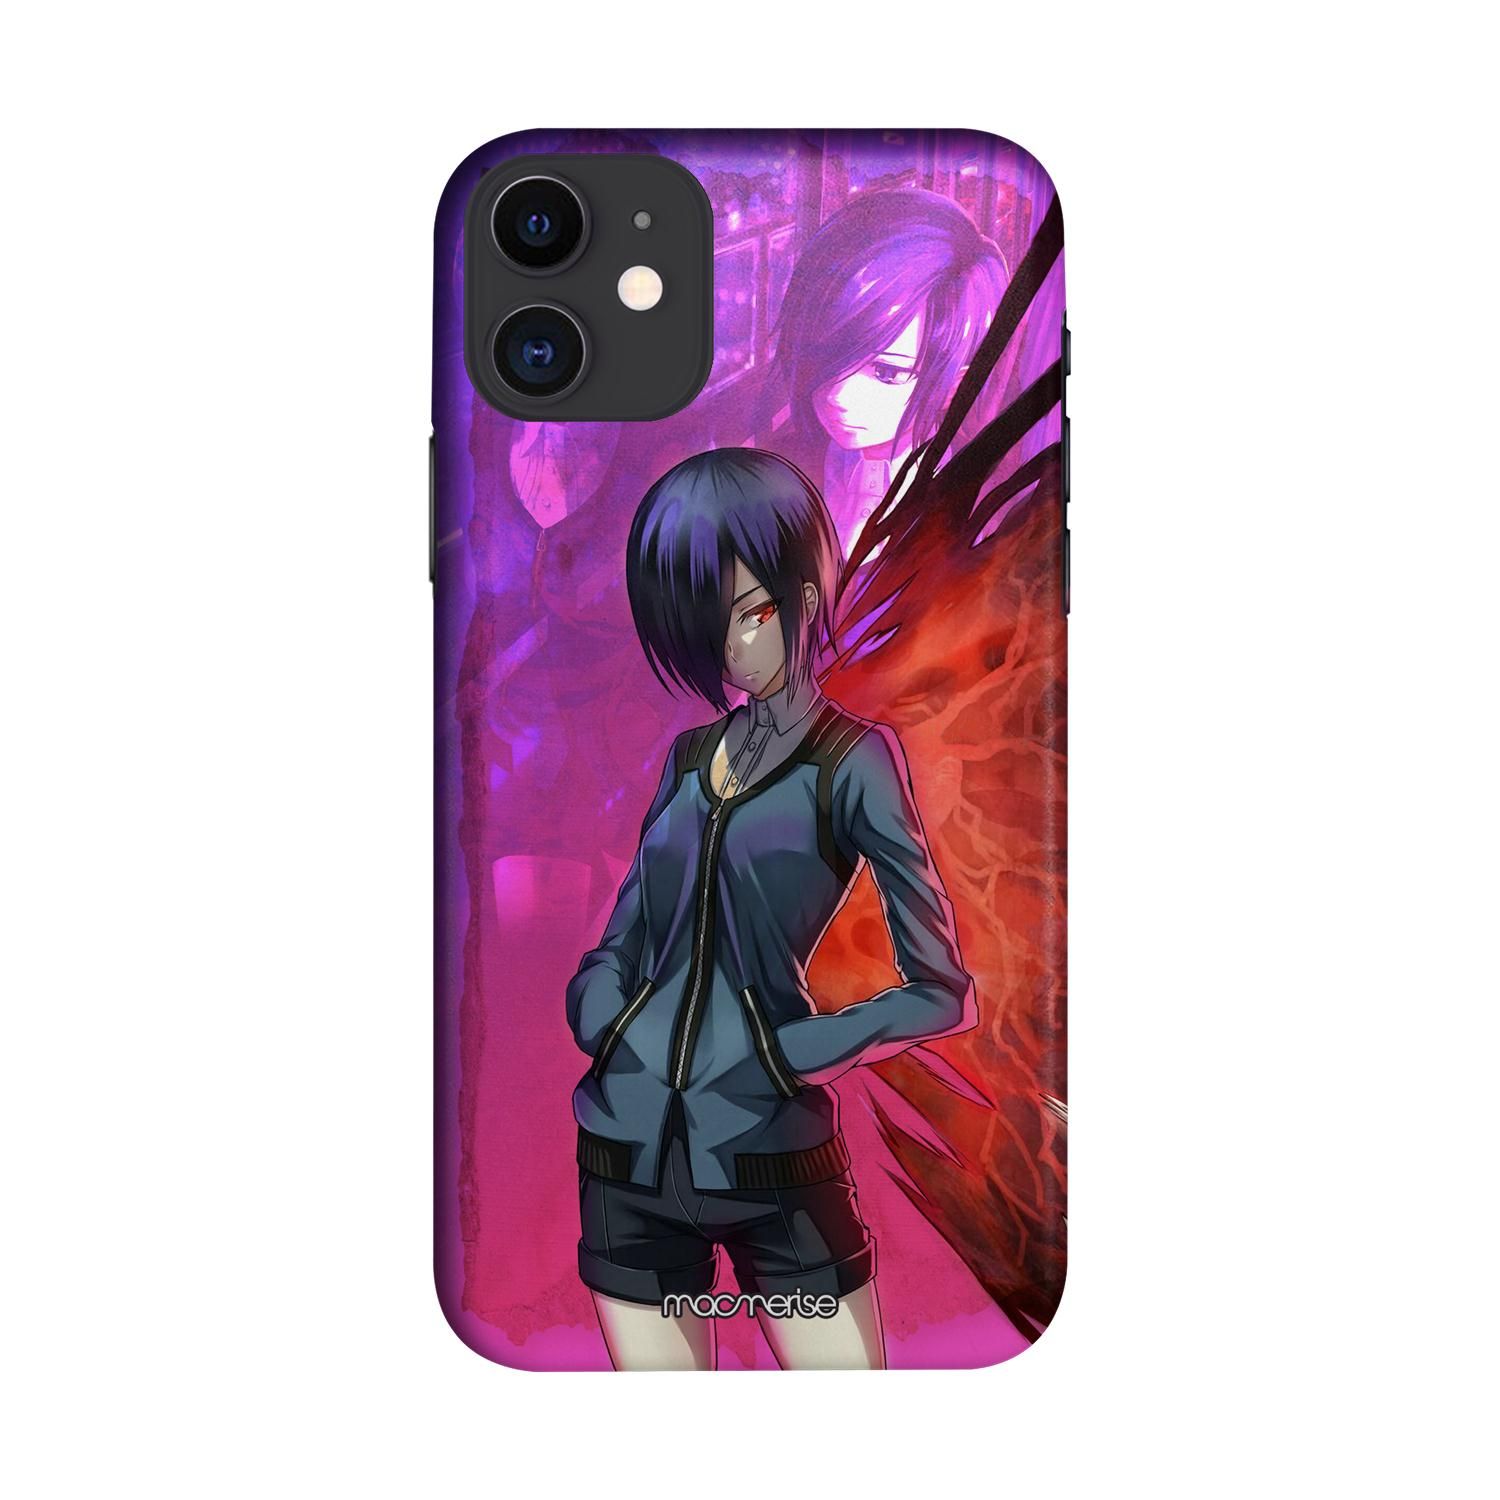 Buy Touka Kirishima - Sleek Phone Case for iPhone 11 Online